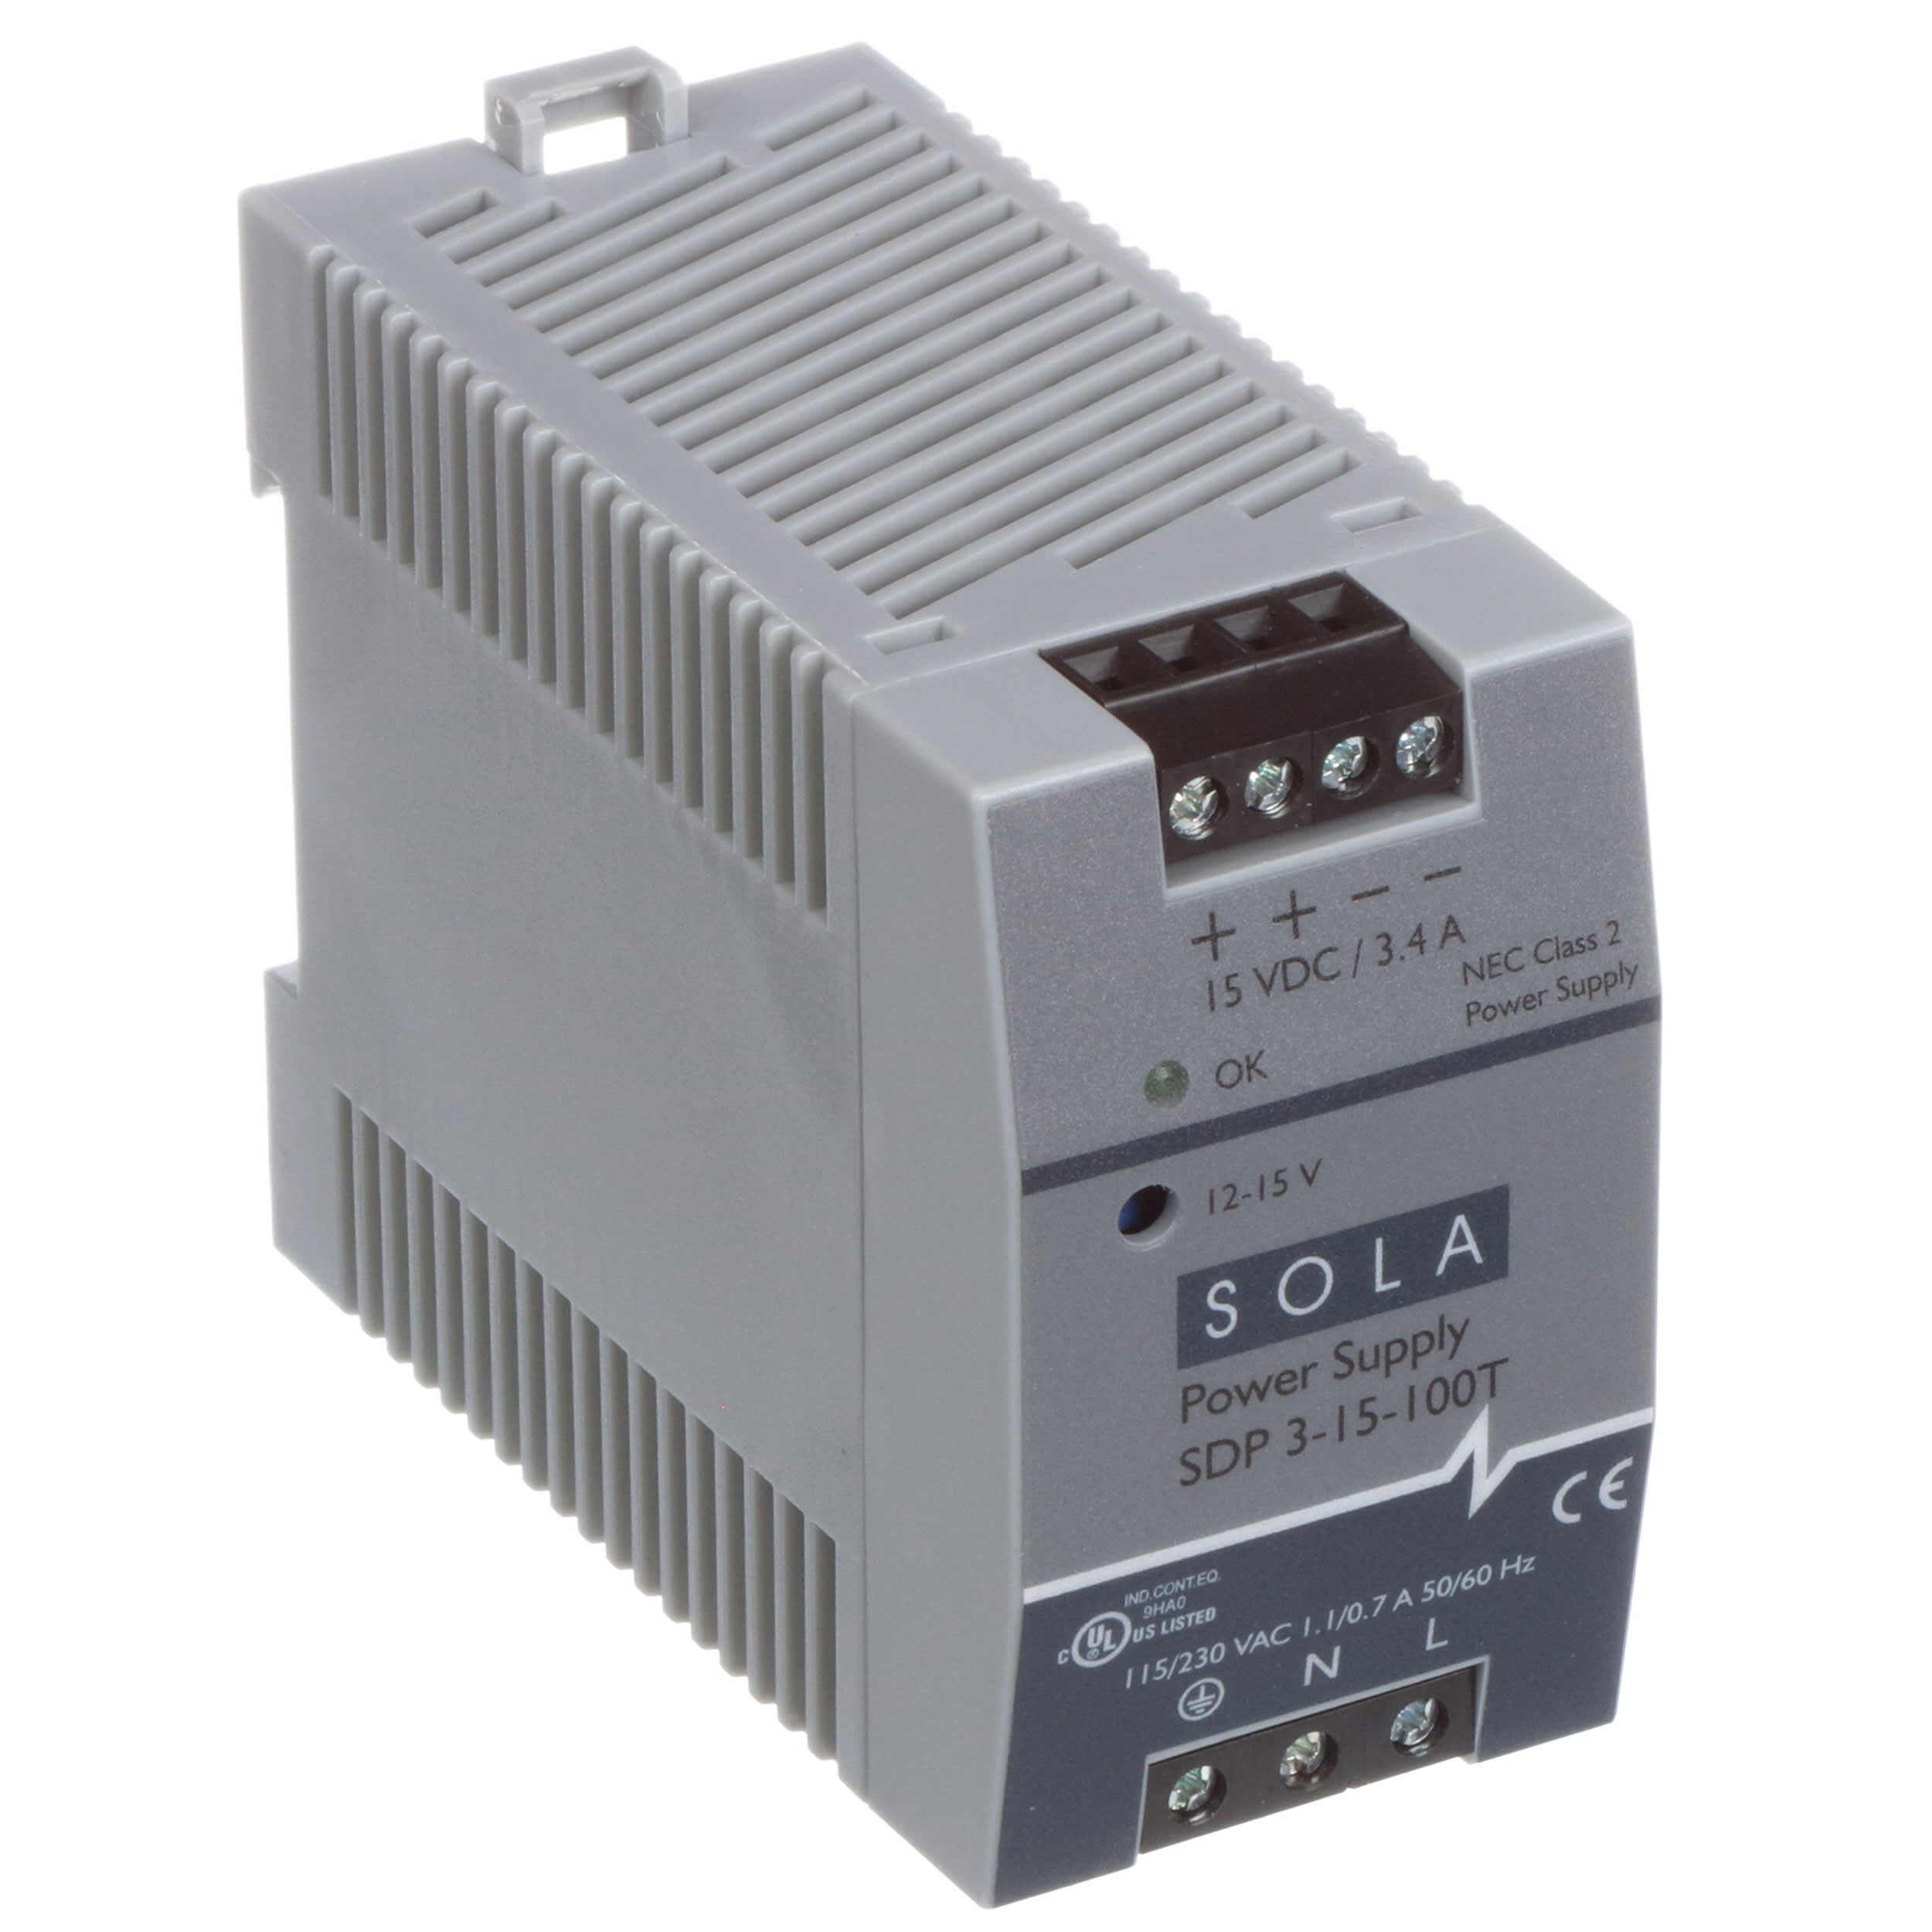 SolaHD - SDP3-15-100T - AC-DC Power Supply, 13.5V, 3.4A, 85-264V 